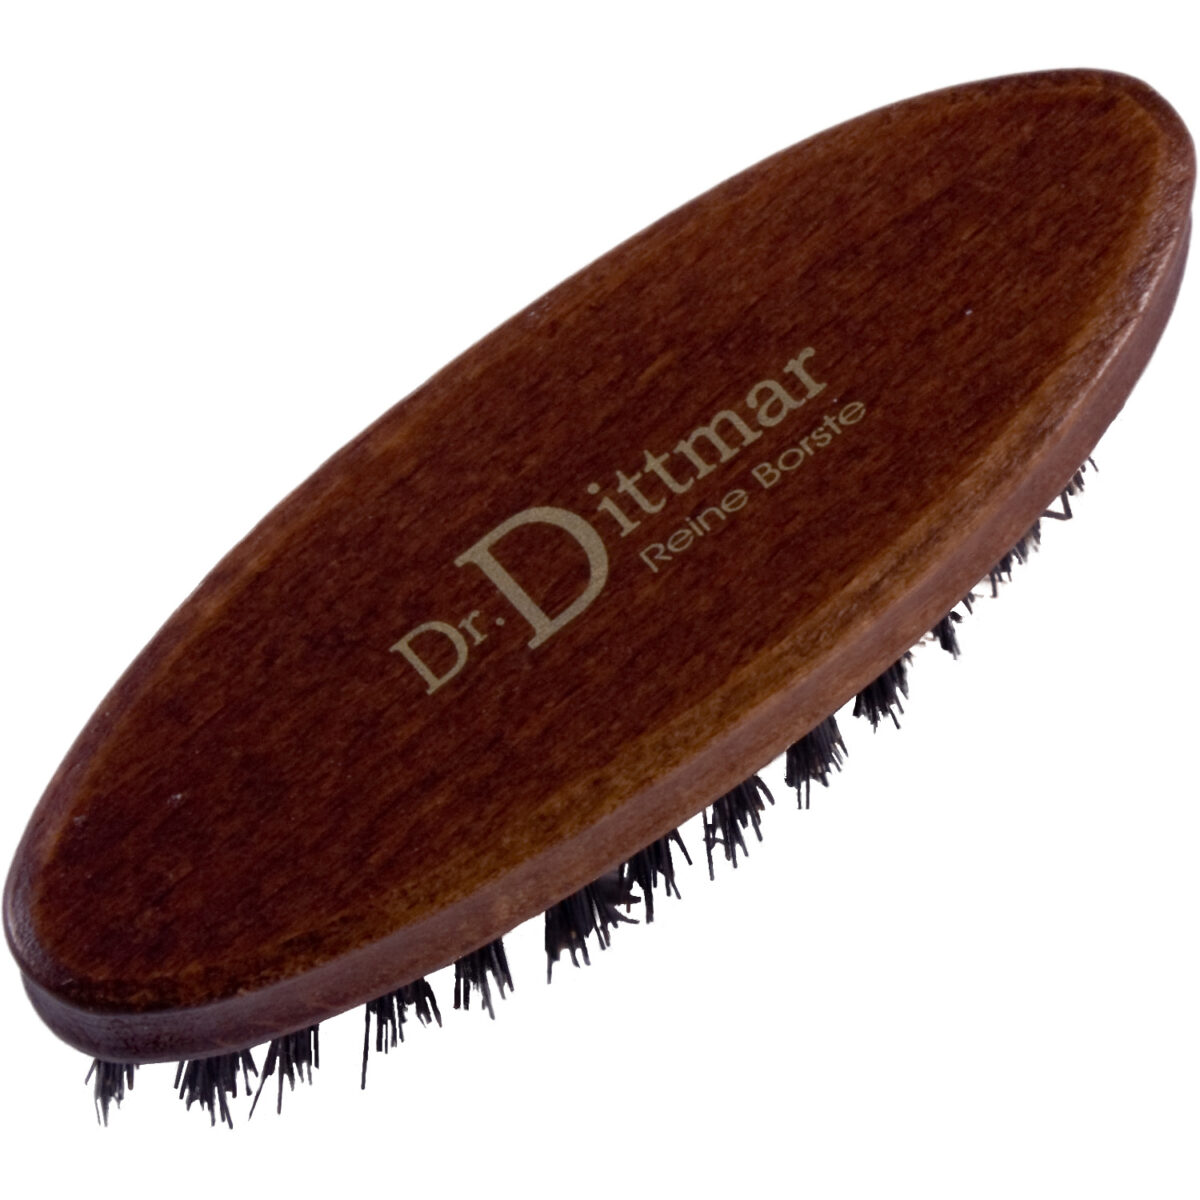 Dr Dittmar beard brush